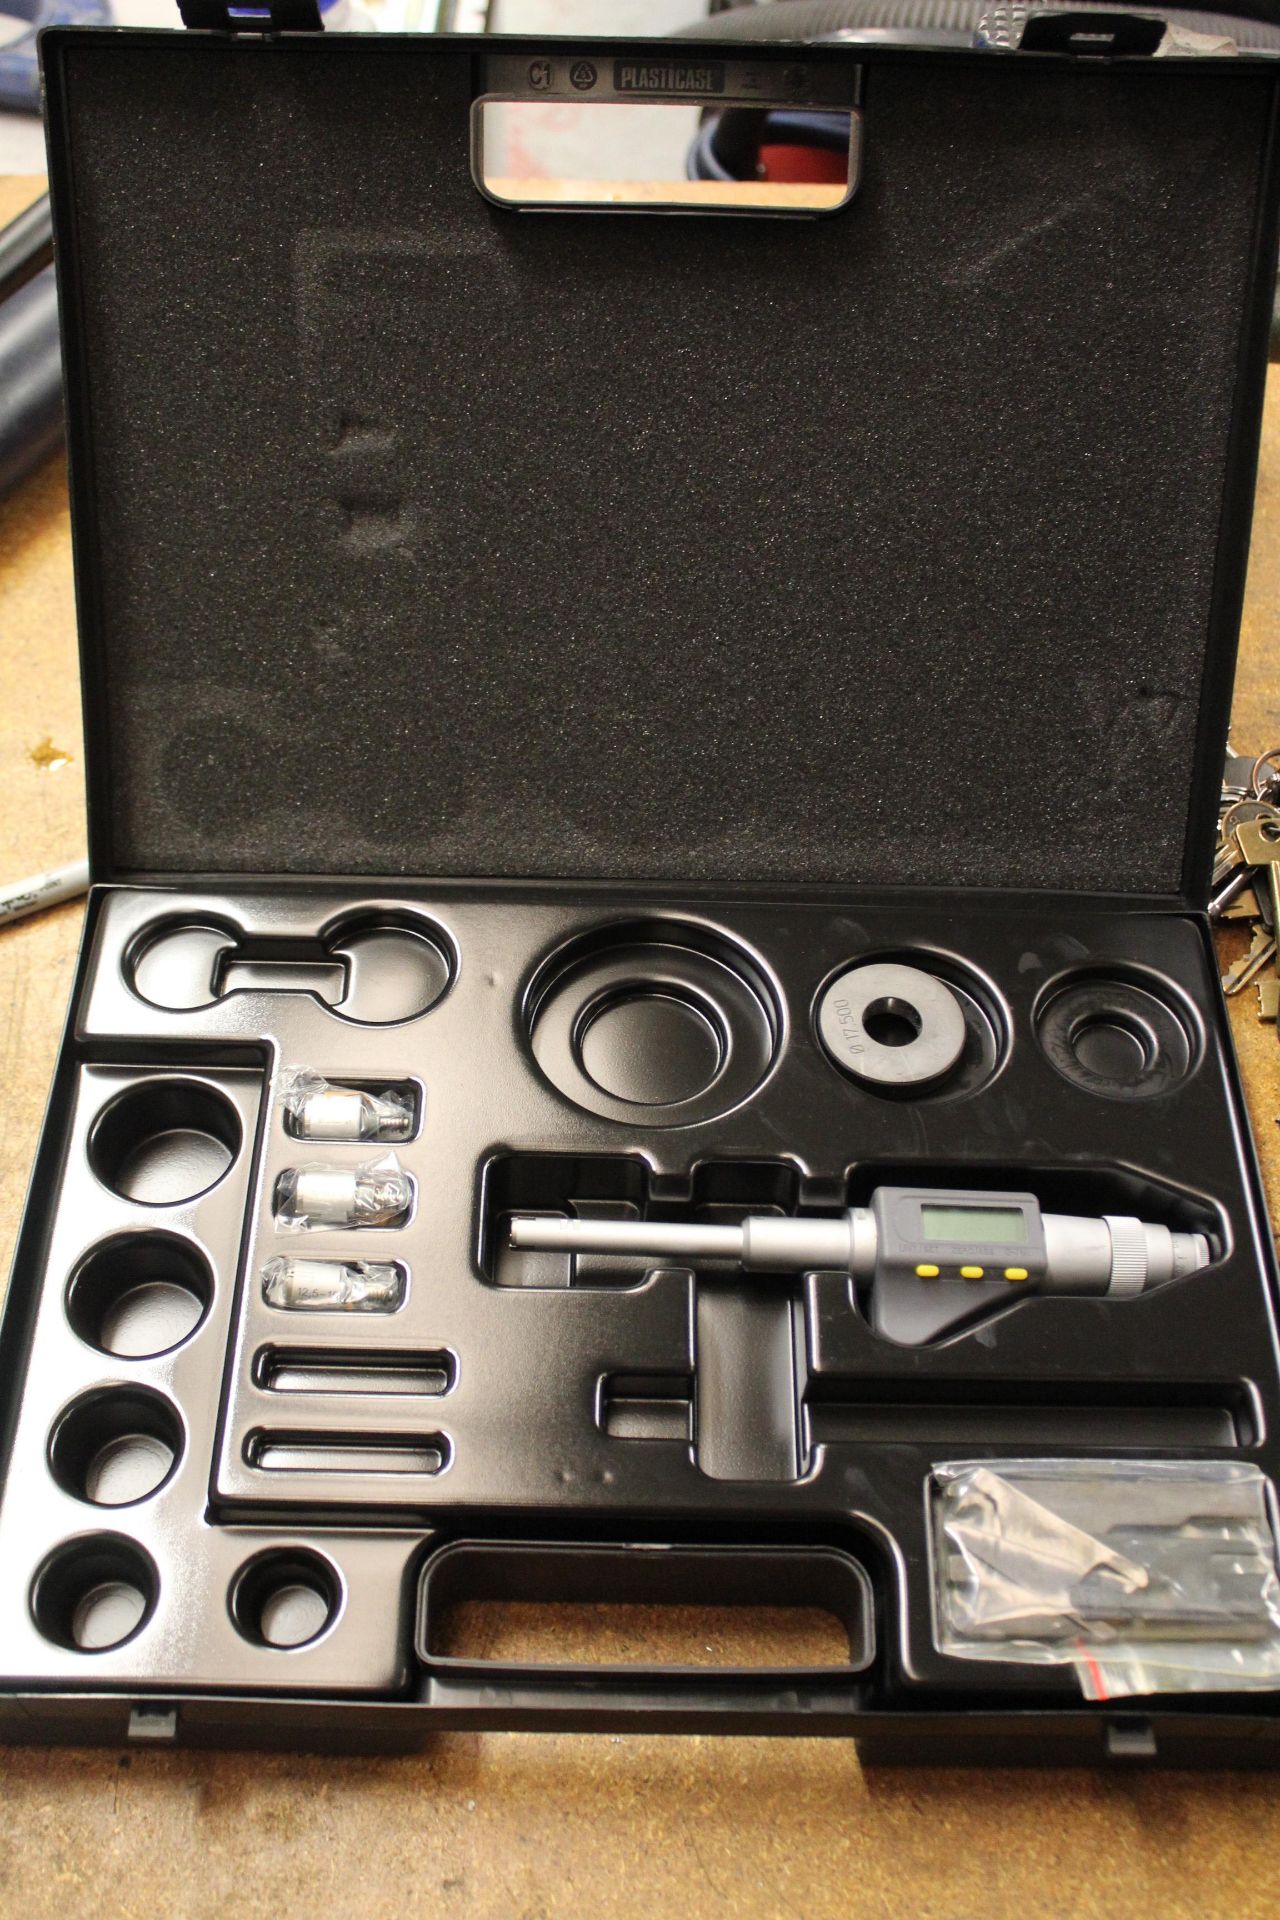 Tessa Type 62.30020 10-20mm micrometer kit Serial No. 1C039501